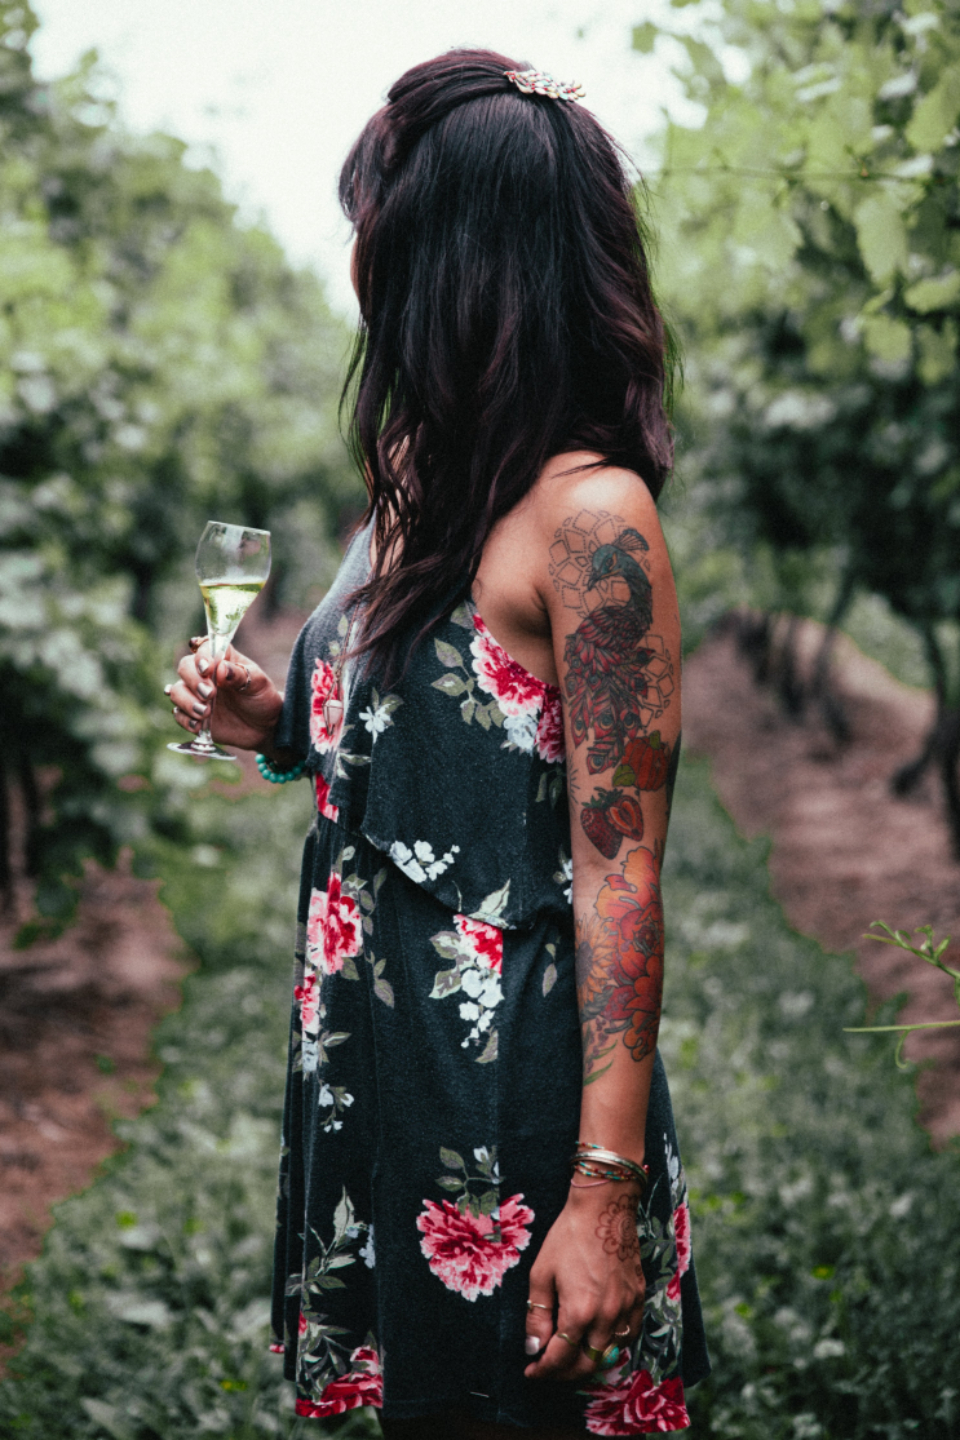 Woman Wine